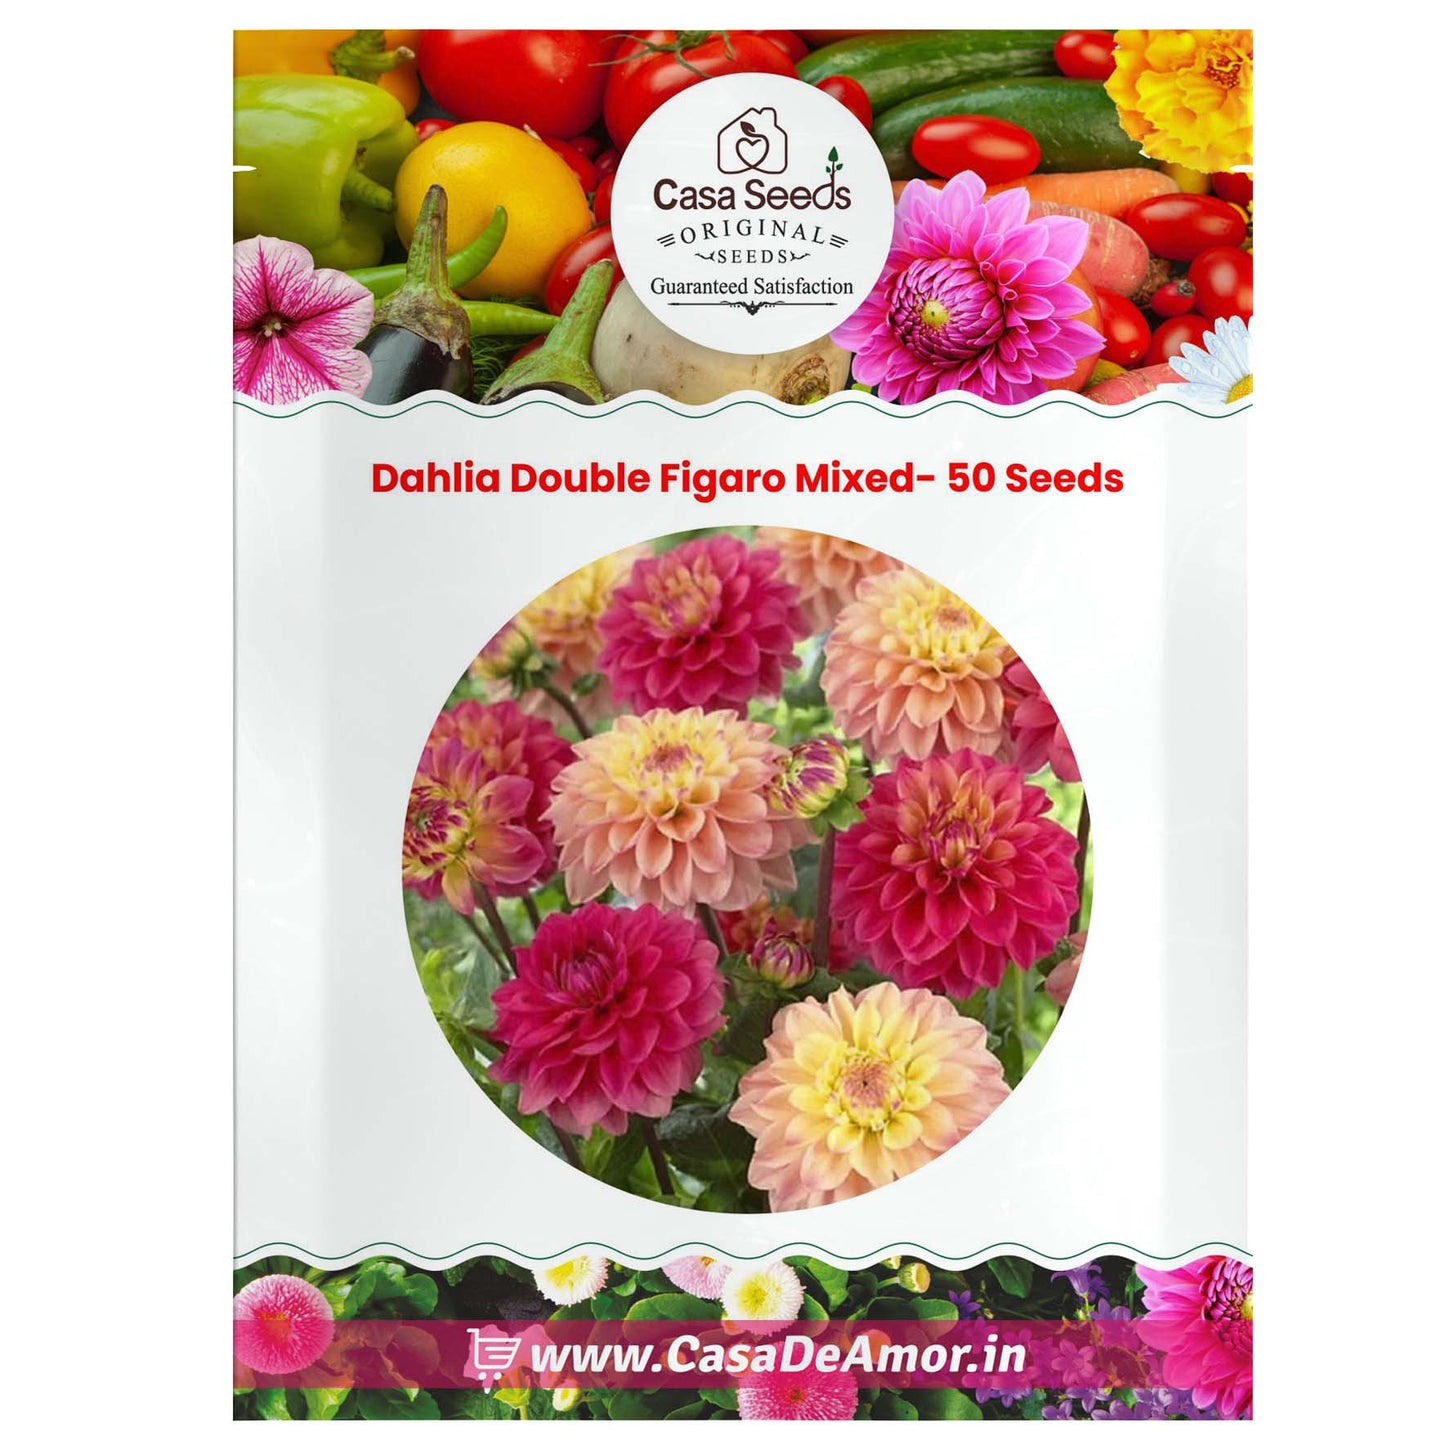 Dahlia Double Figaro Mixed- 50 Seeds